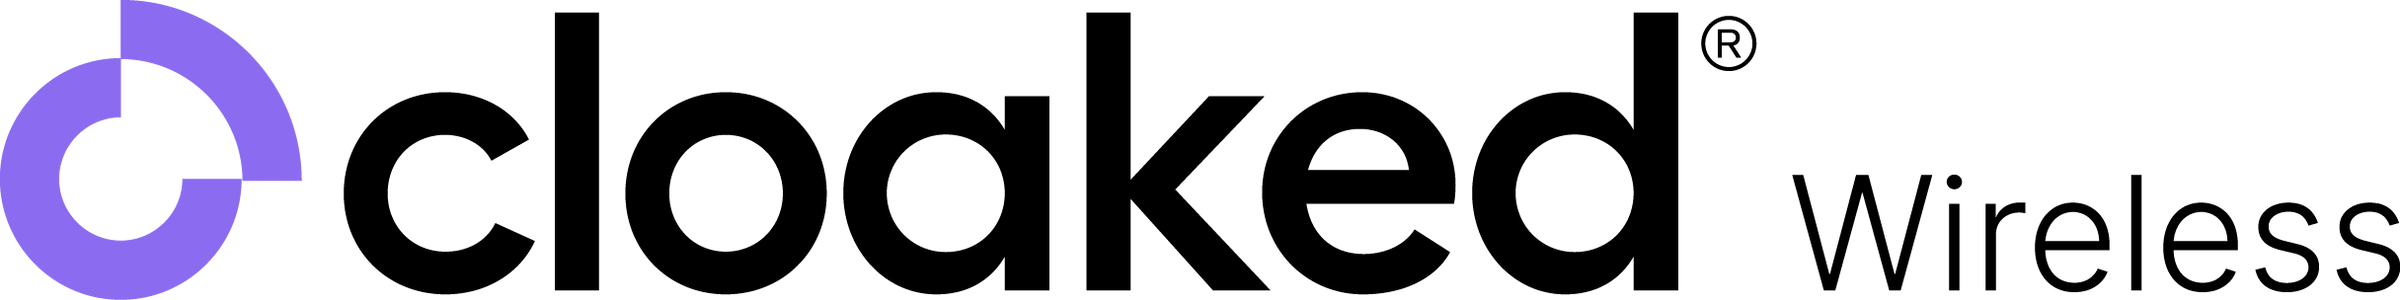 cloaked wireless logo